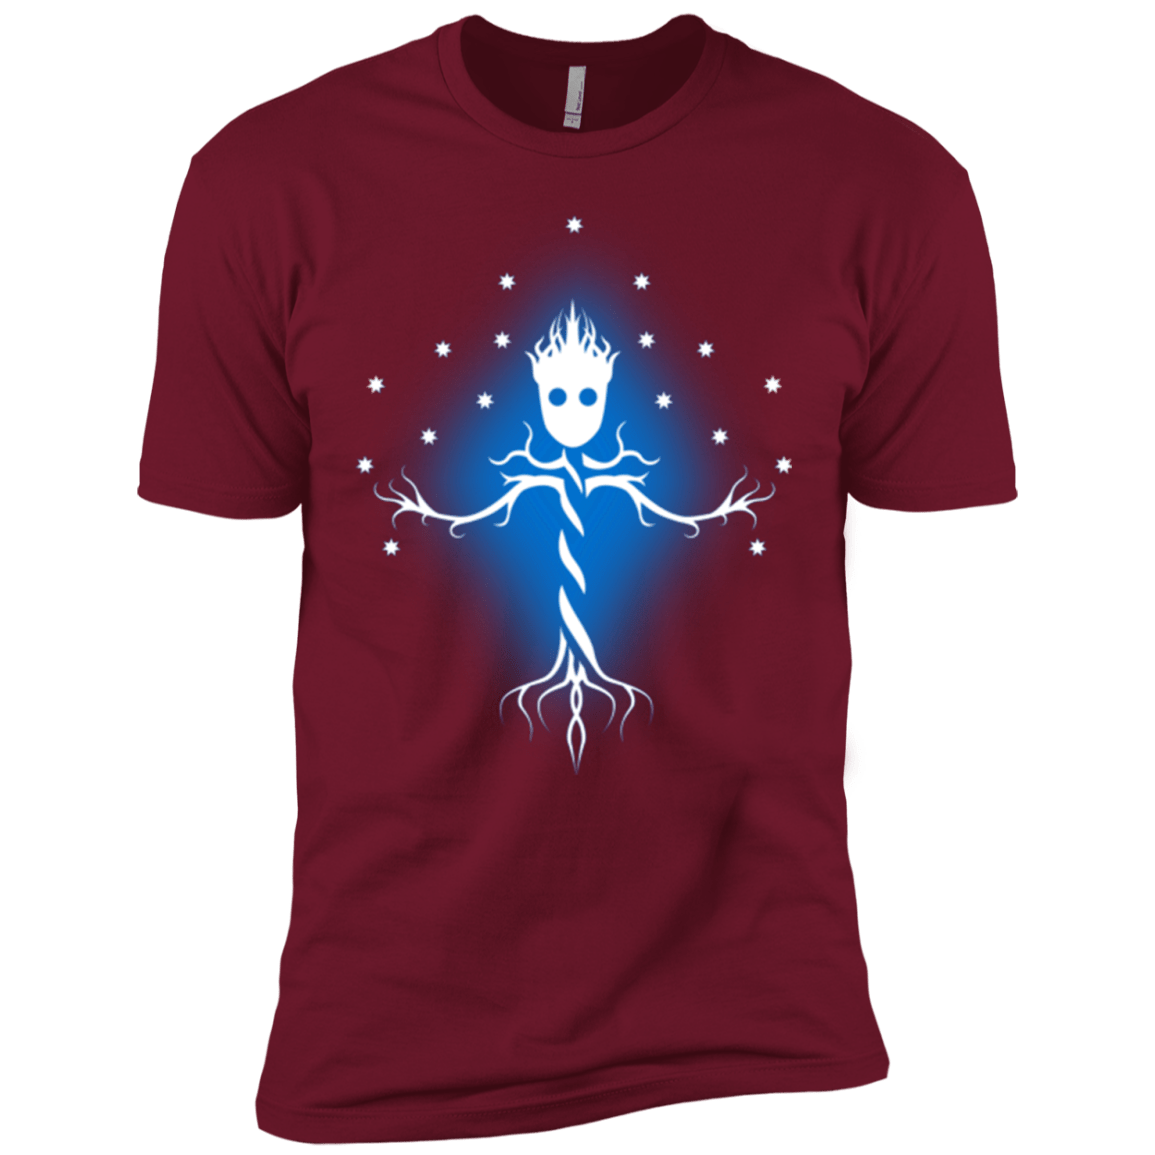 Guardian Tree of The Galaxy Men's Premium T-Shirt